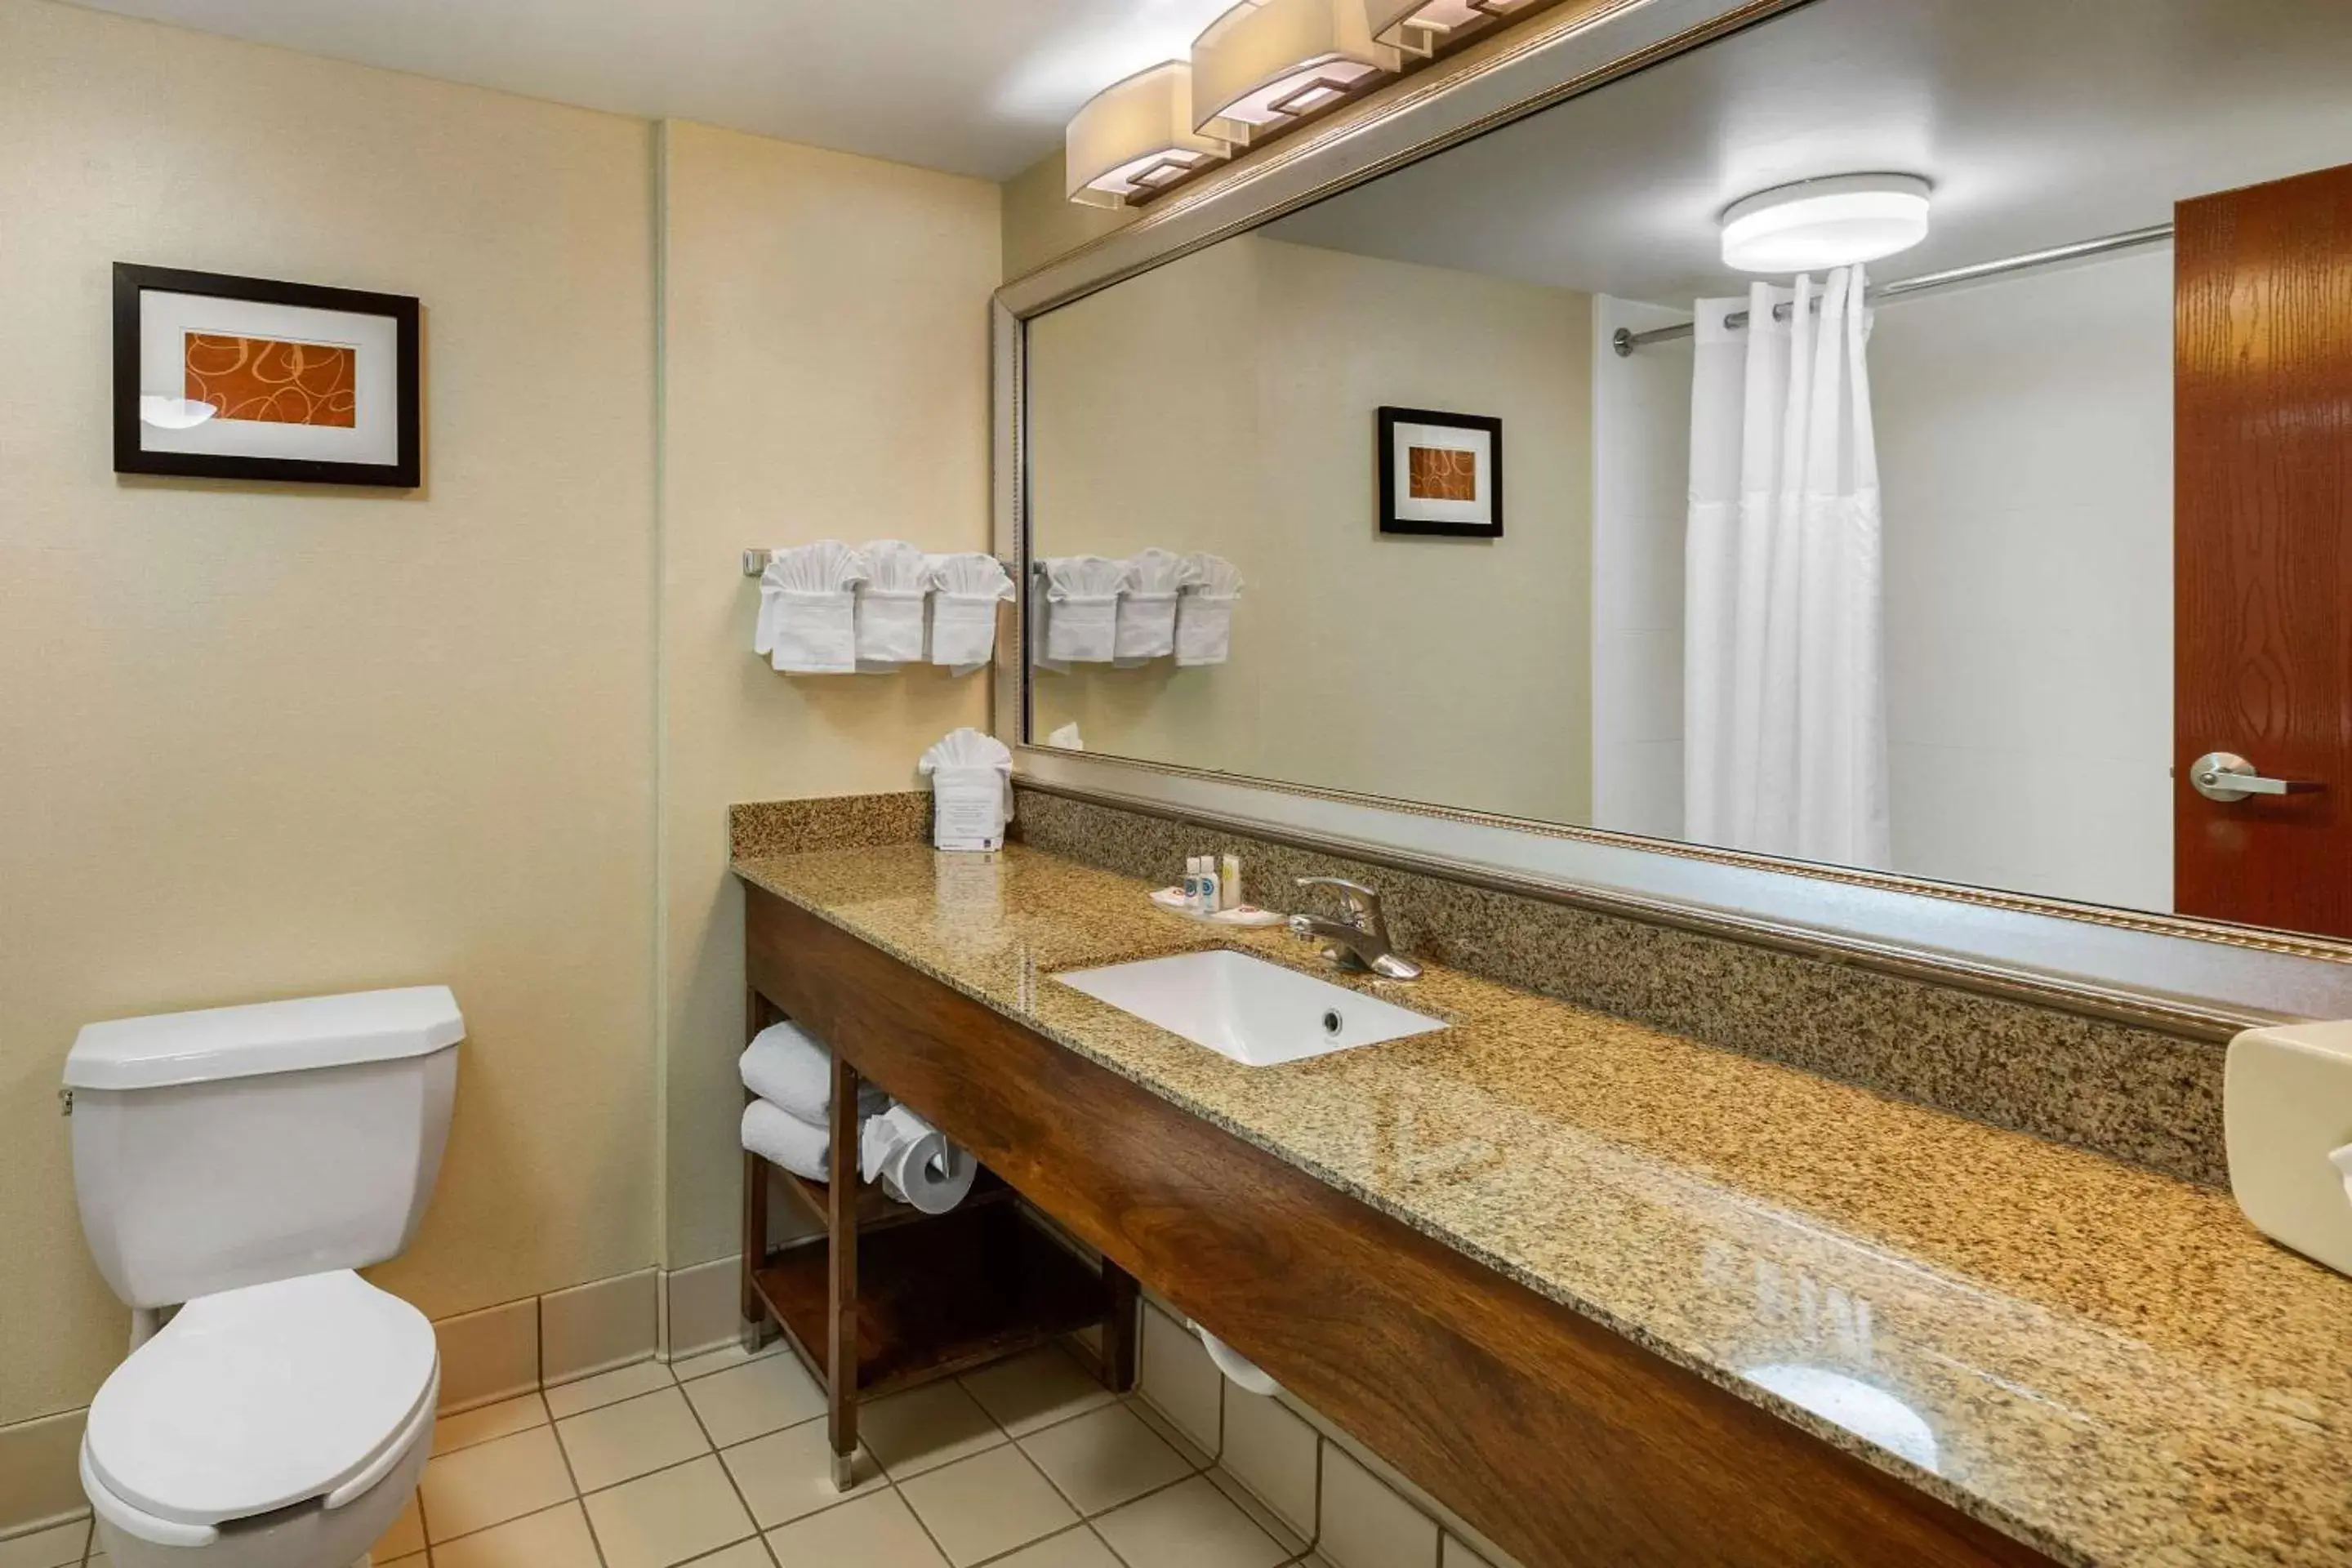 Photo of the whole room, Bathroom in Comfort Suites Manassas